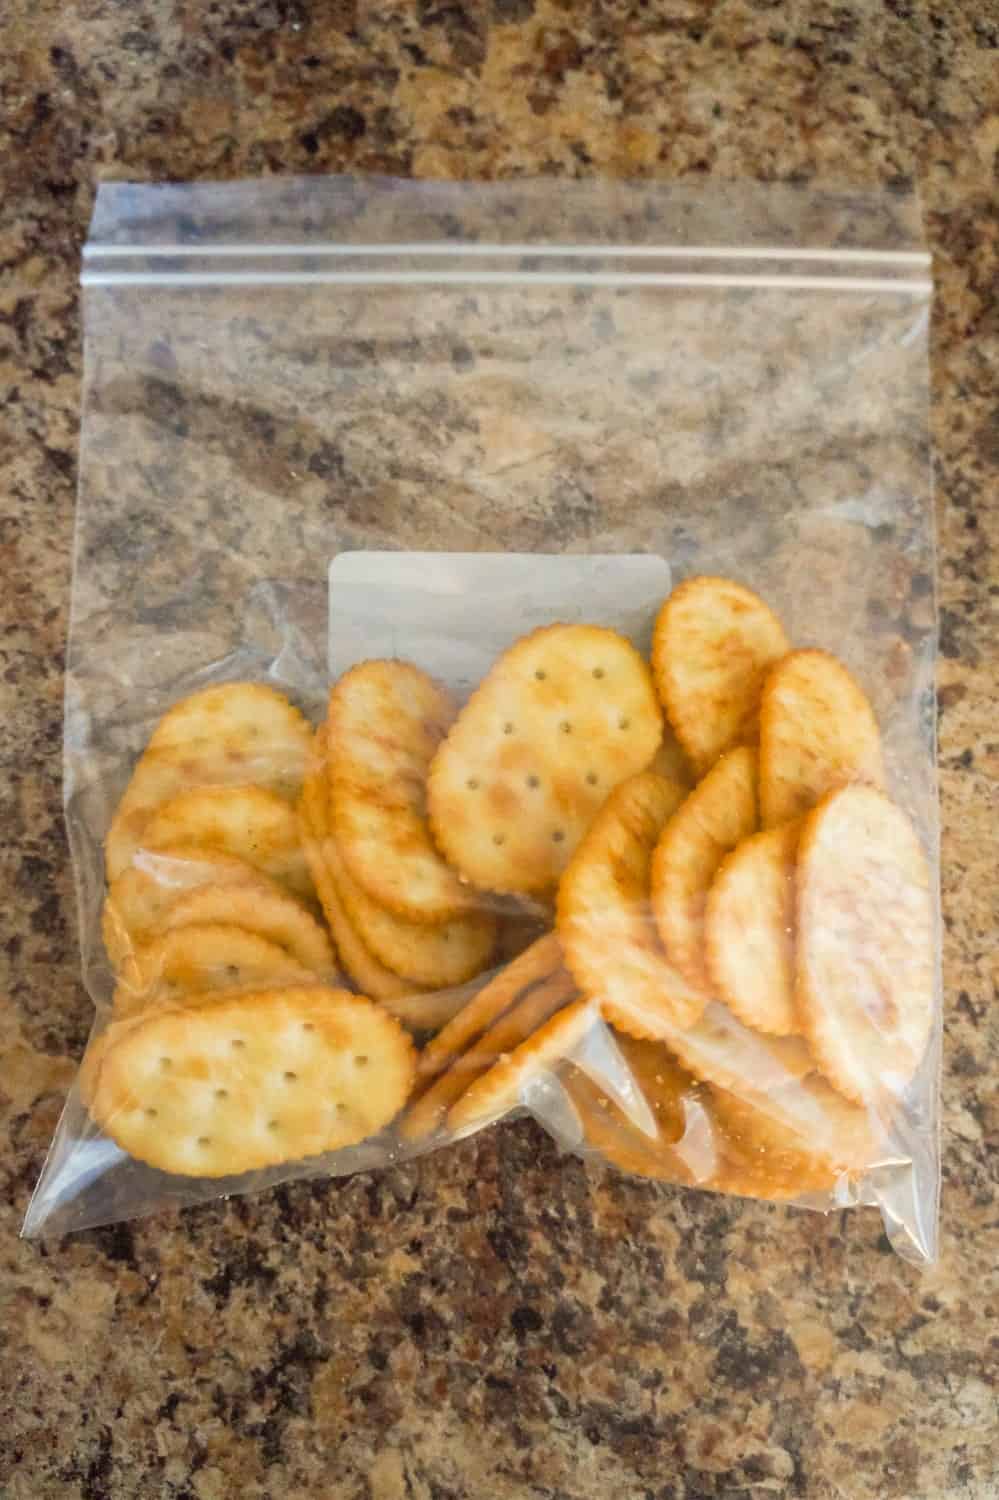 Townhouse Original crackers in a Ziploc bag